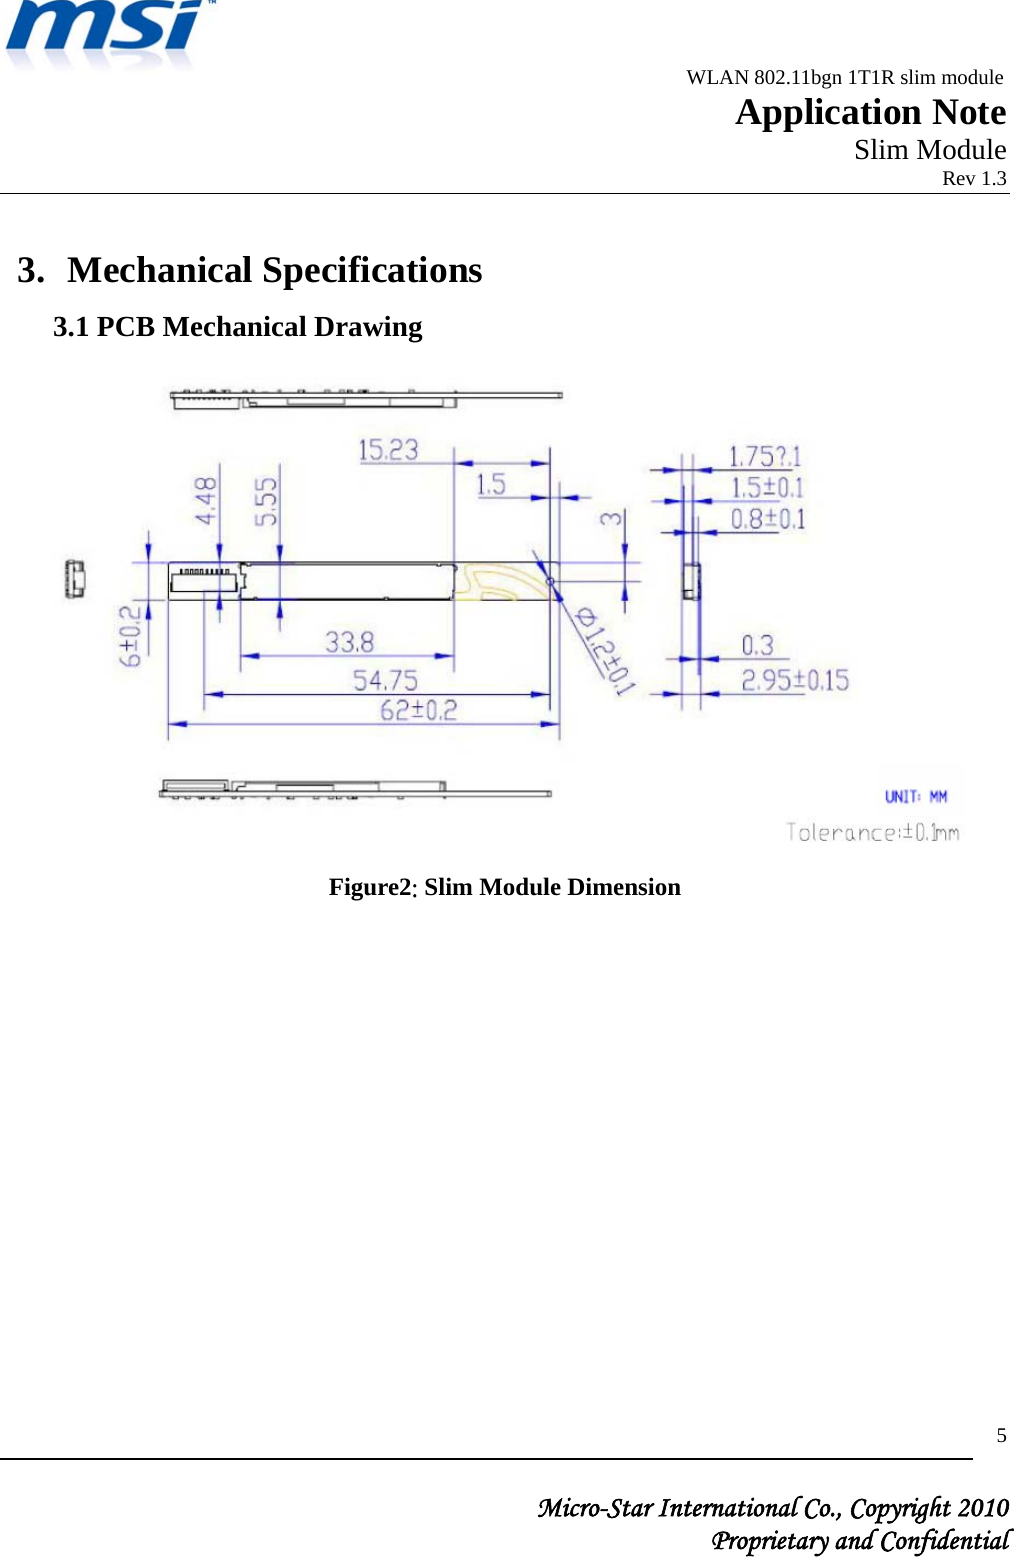                                              WLAN 802.11bgn 1T1R slim module                                                         Application Note                                                       Slim Module                                                                            Rev 1.3   Micro-Star International Co., Copyright 2010  Proprietary and Confidential 5 3. Mechanical Specifications 3.1 PCB Mechanical Drawing  Figure2: Slim Module Dimension               